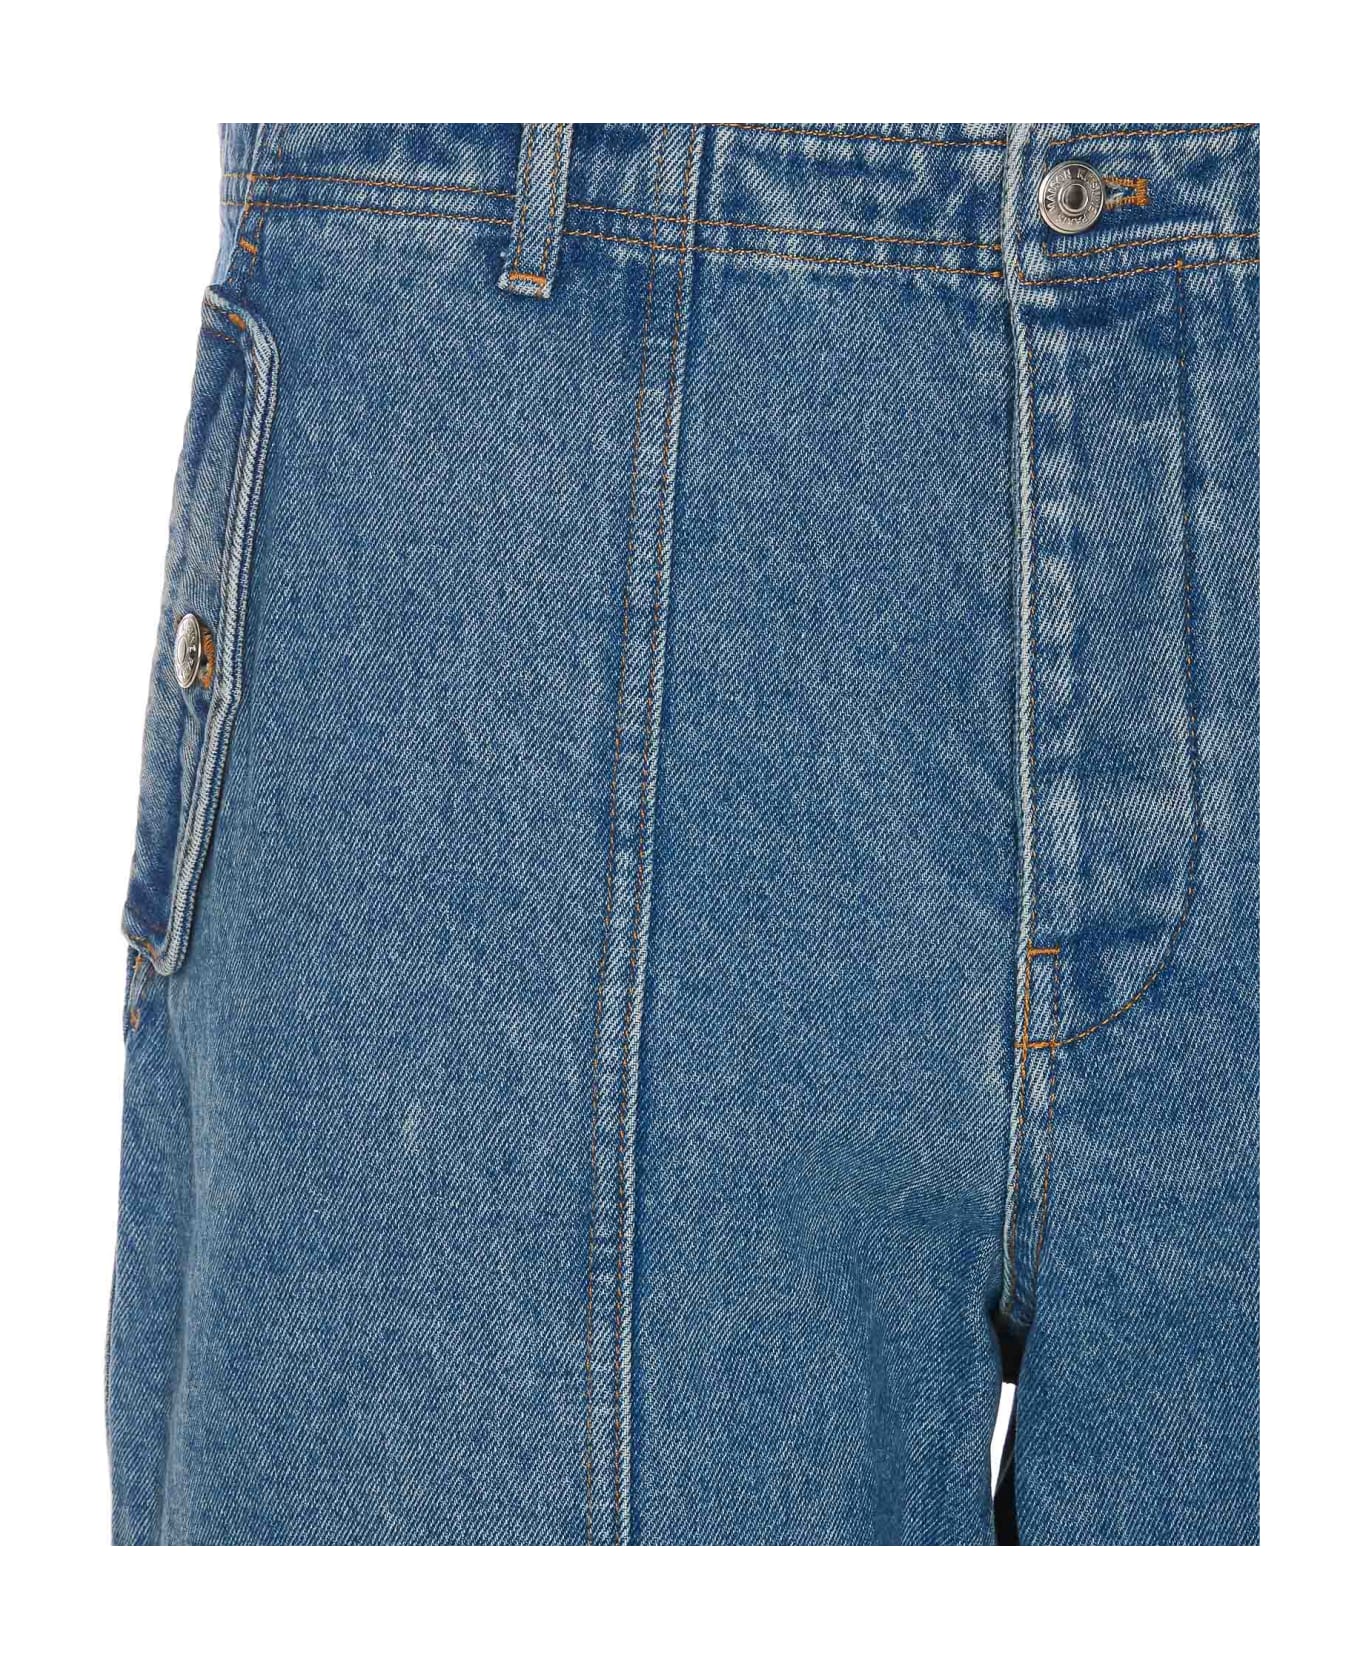 Maison Kitsuné Workwear Denim Jeans - Light stone indigo デニム